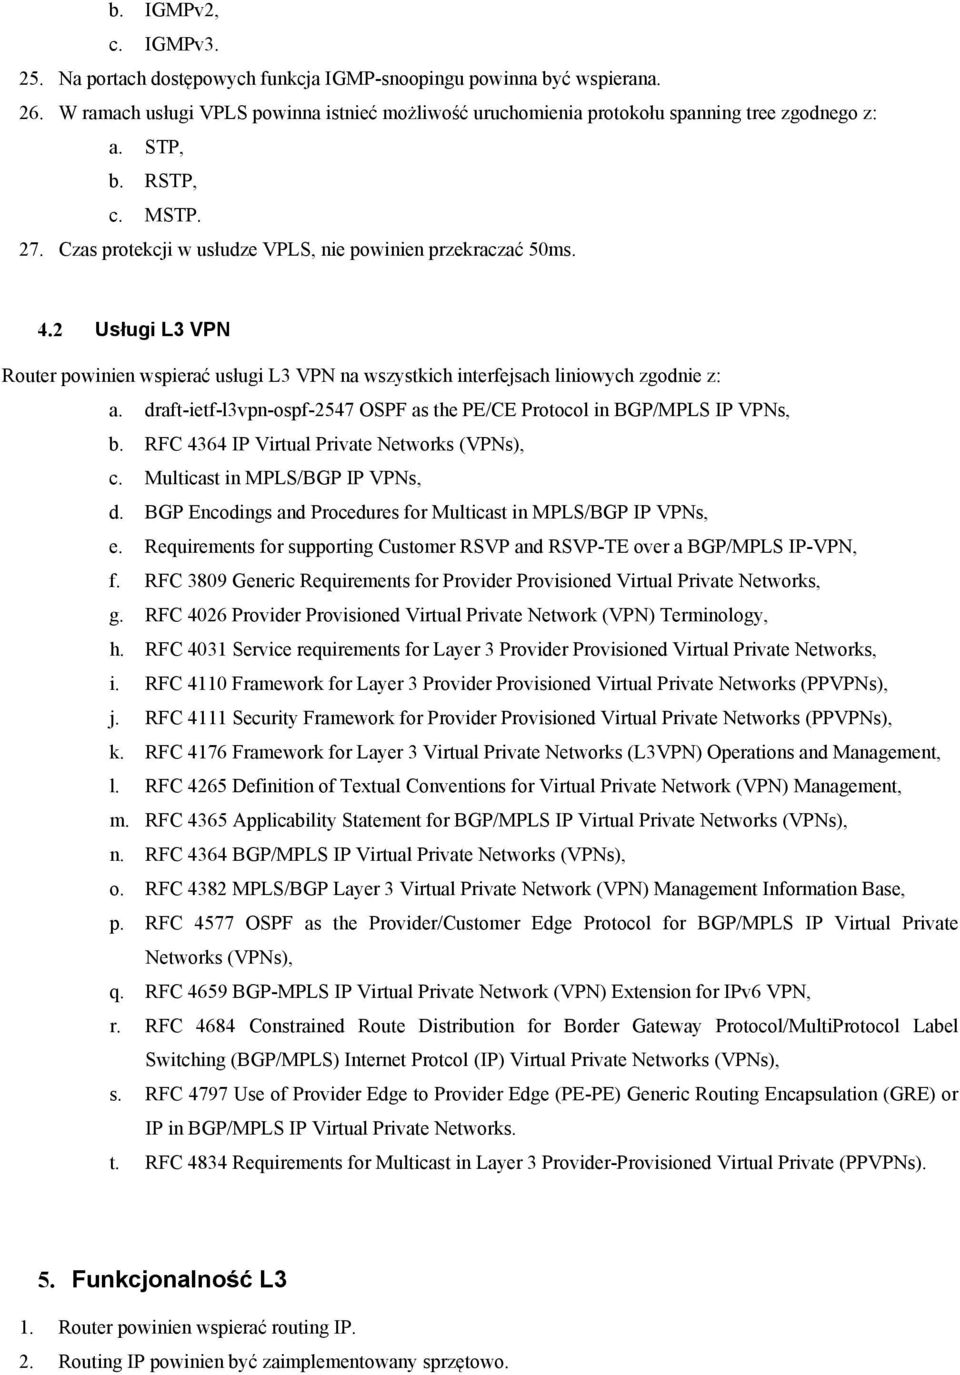 draft-ietf-l3vpn-ospf-2547 OSPF as the PE/CE Protocol in BGP/MPLS IP VPNs, b. RFC 4364 IP Virtual Private Networks (VPNs), c. Multicast in MPLS/BGP IP VPNs, d.